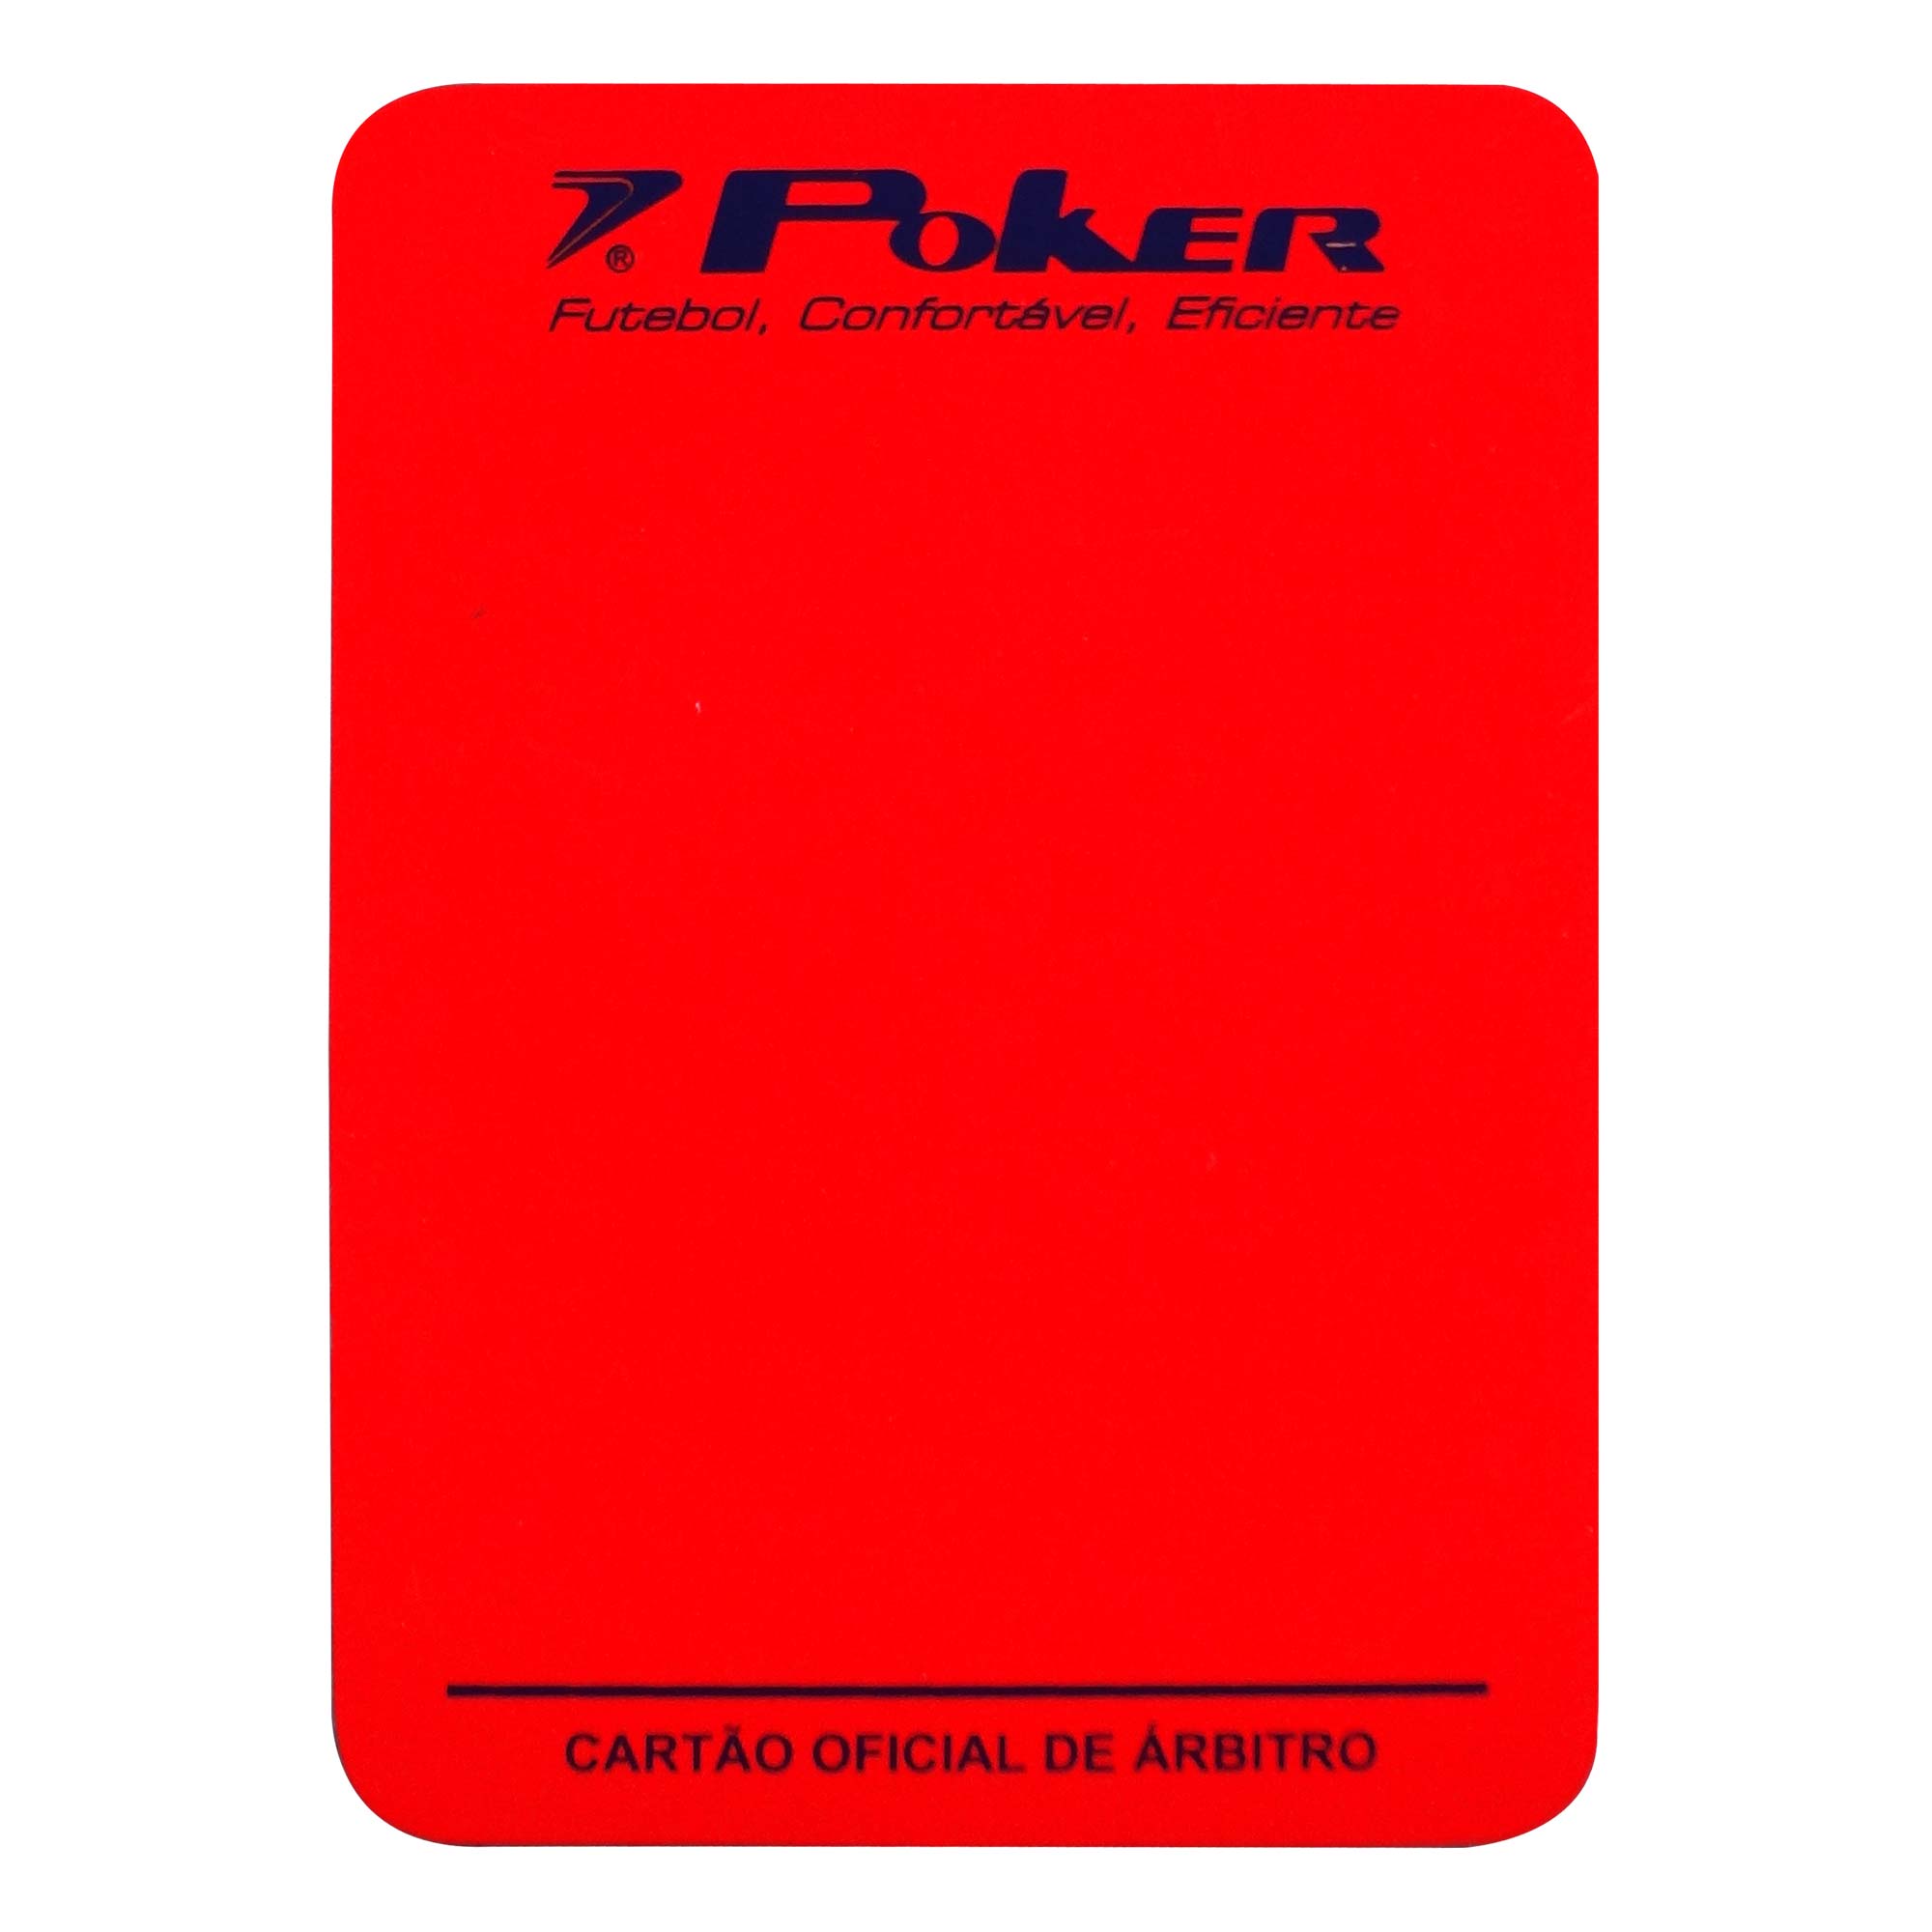 Cartão Futsal Poker Arbitro Oficial